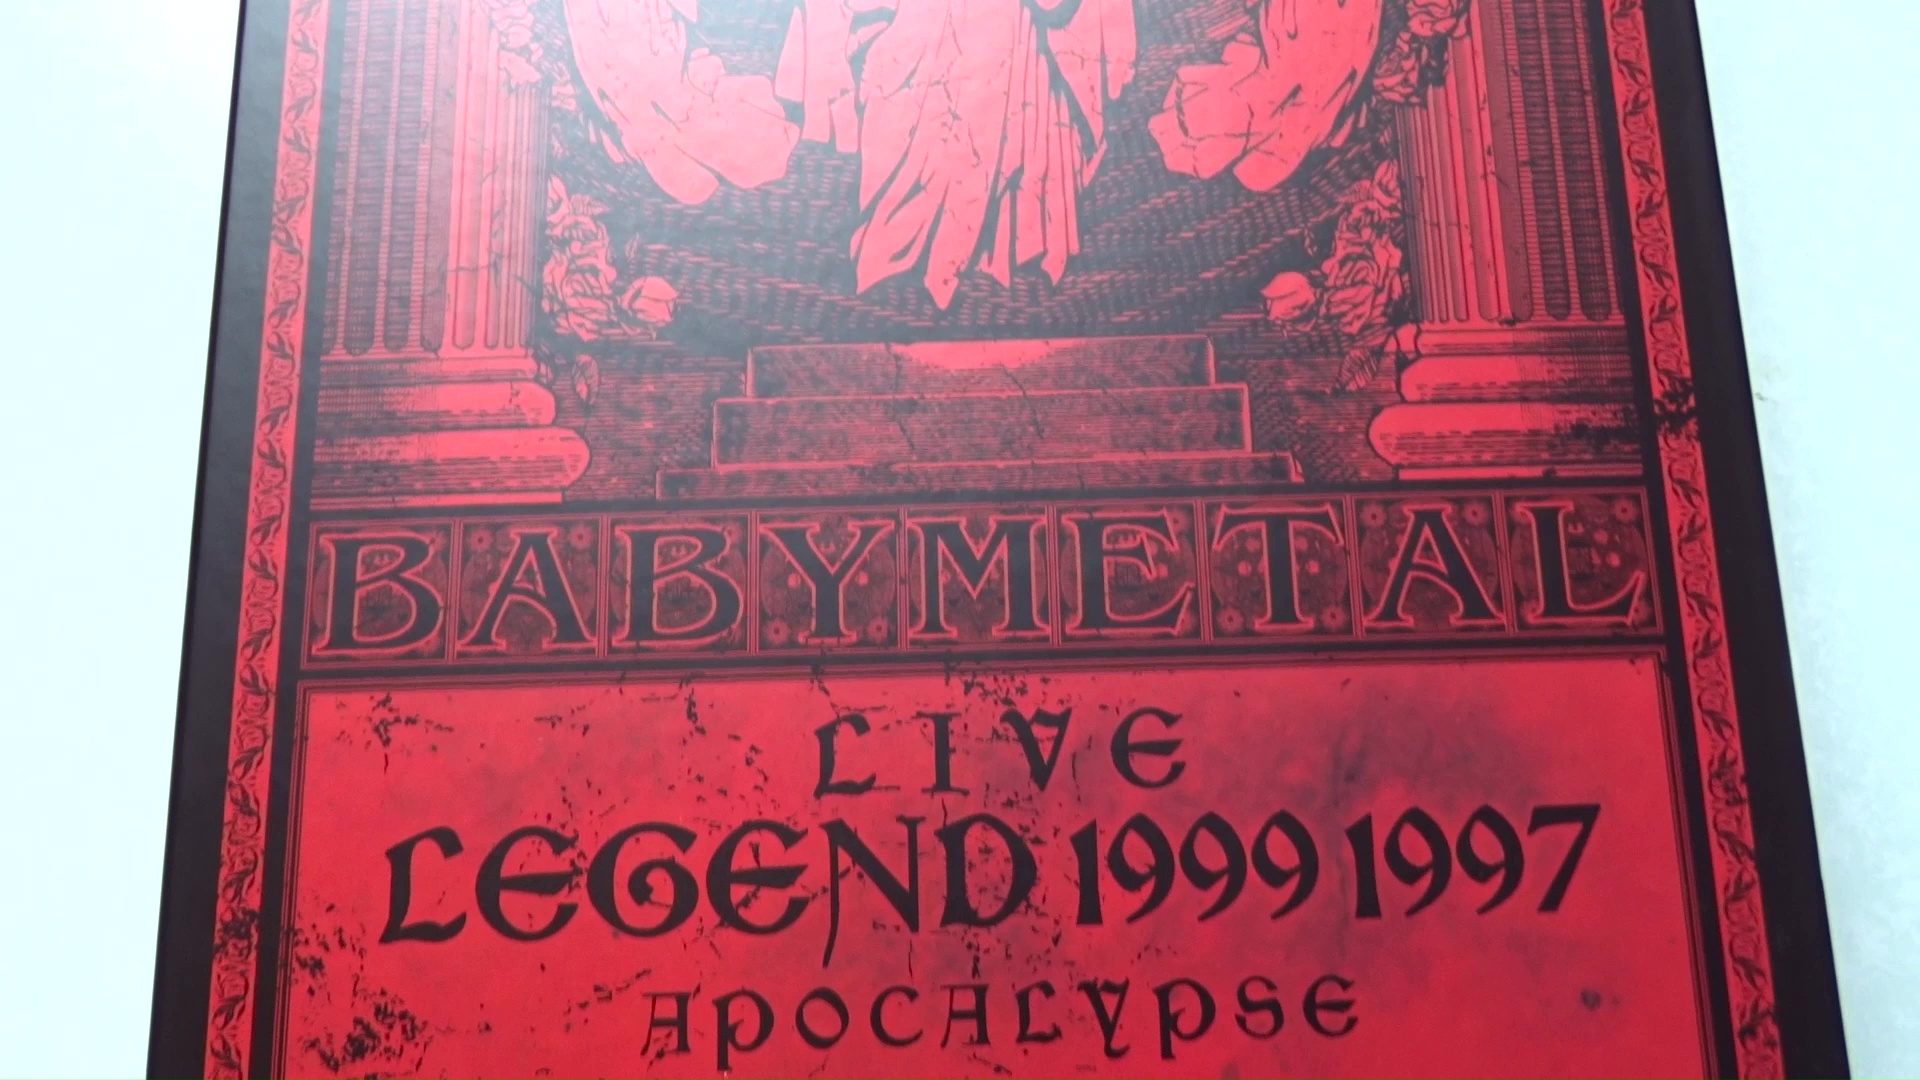 Limited Edition BABYMETAL Live Legend 1999 1997 Apocalypse Unboxing